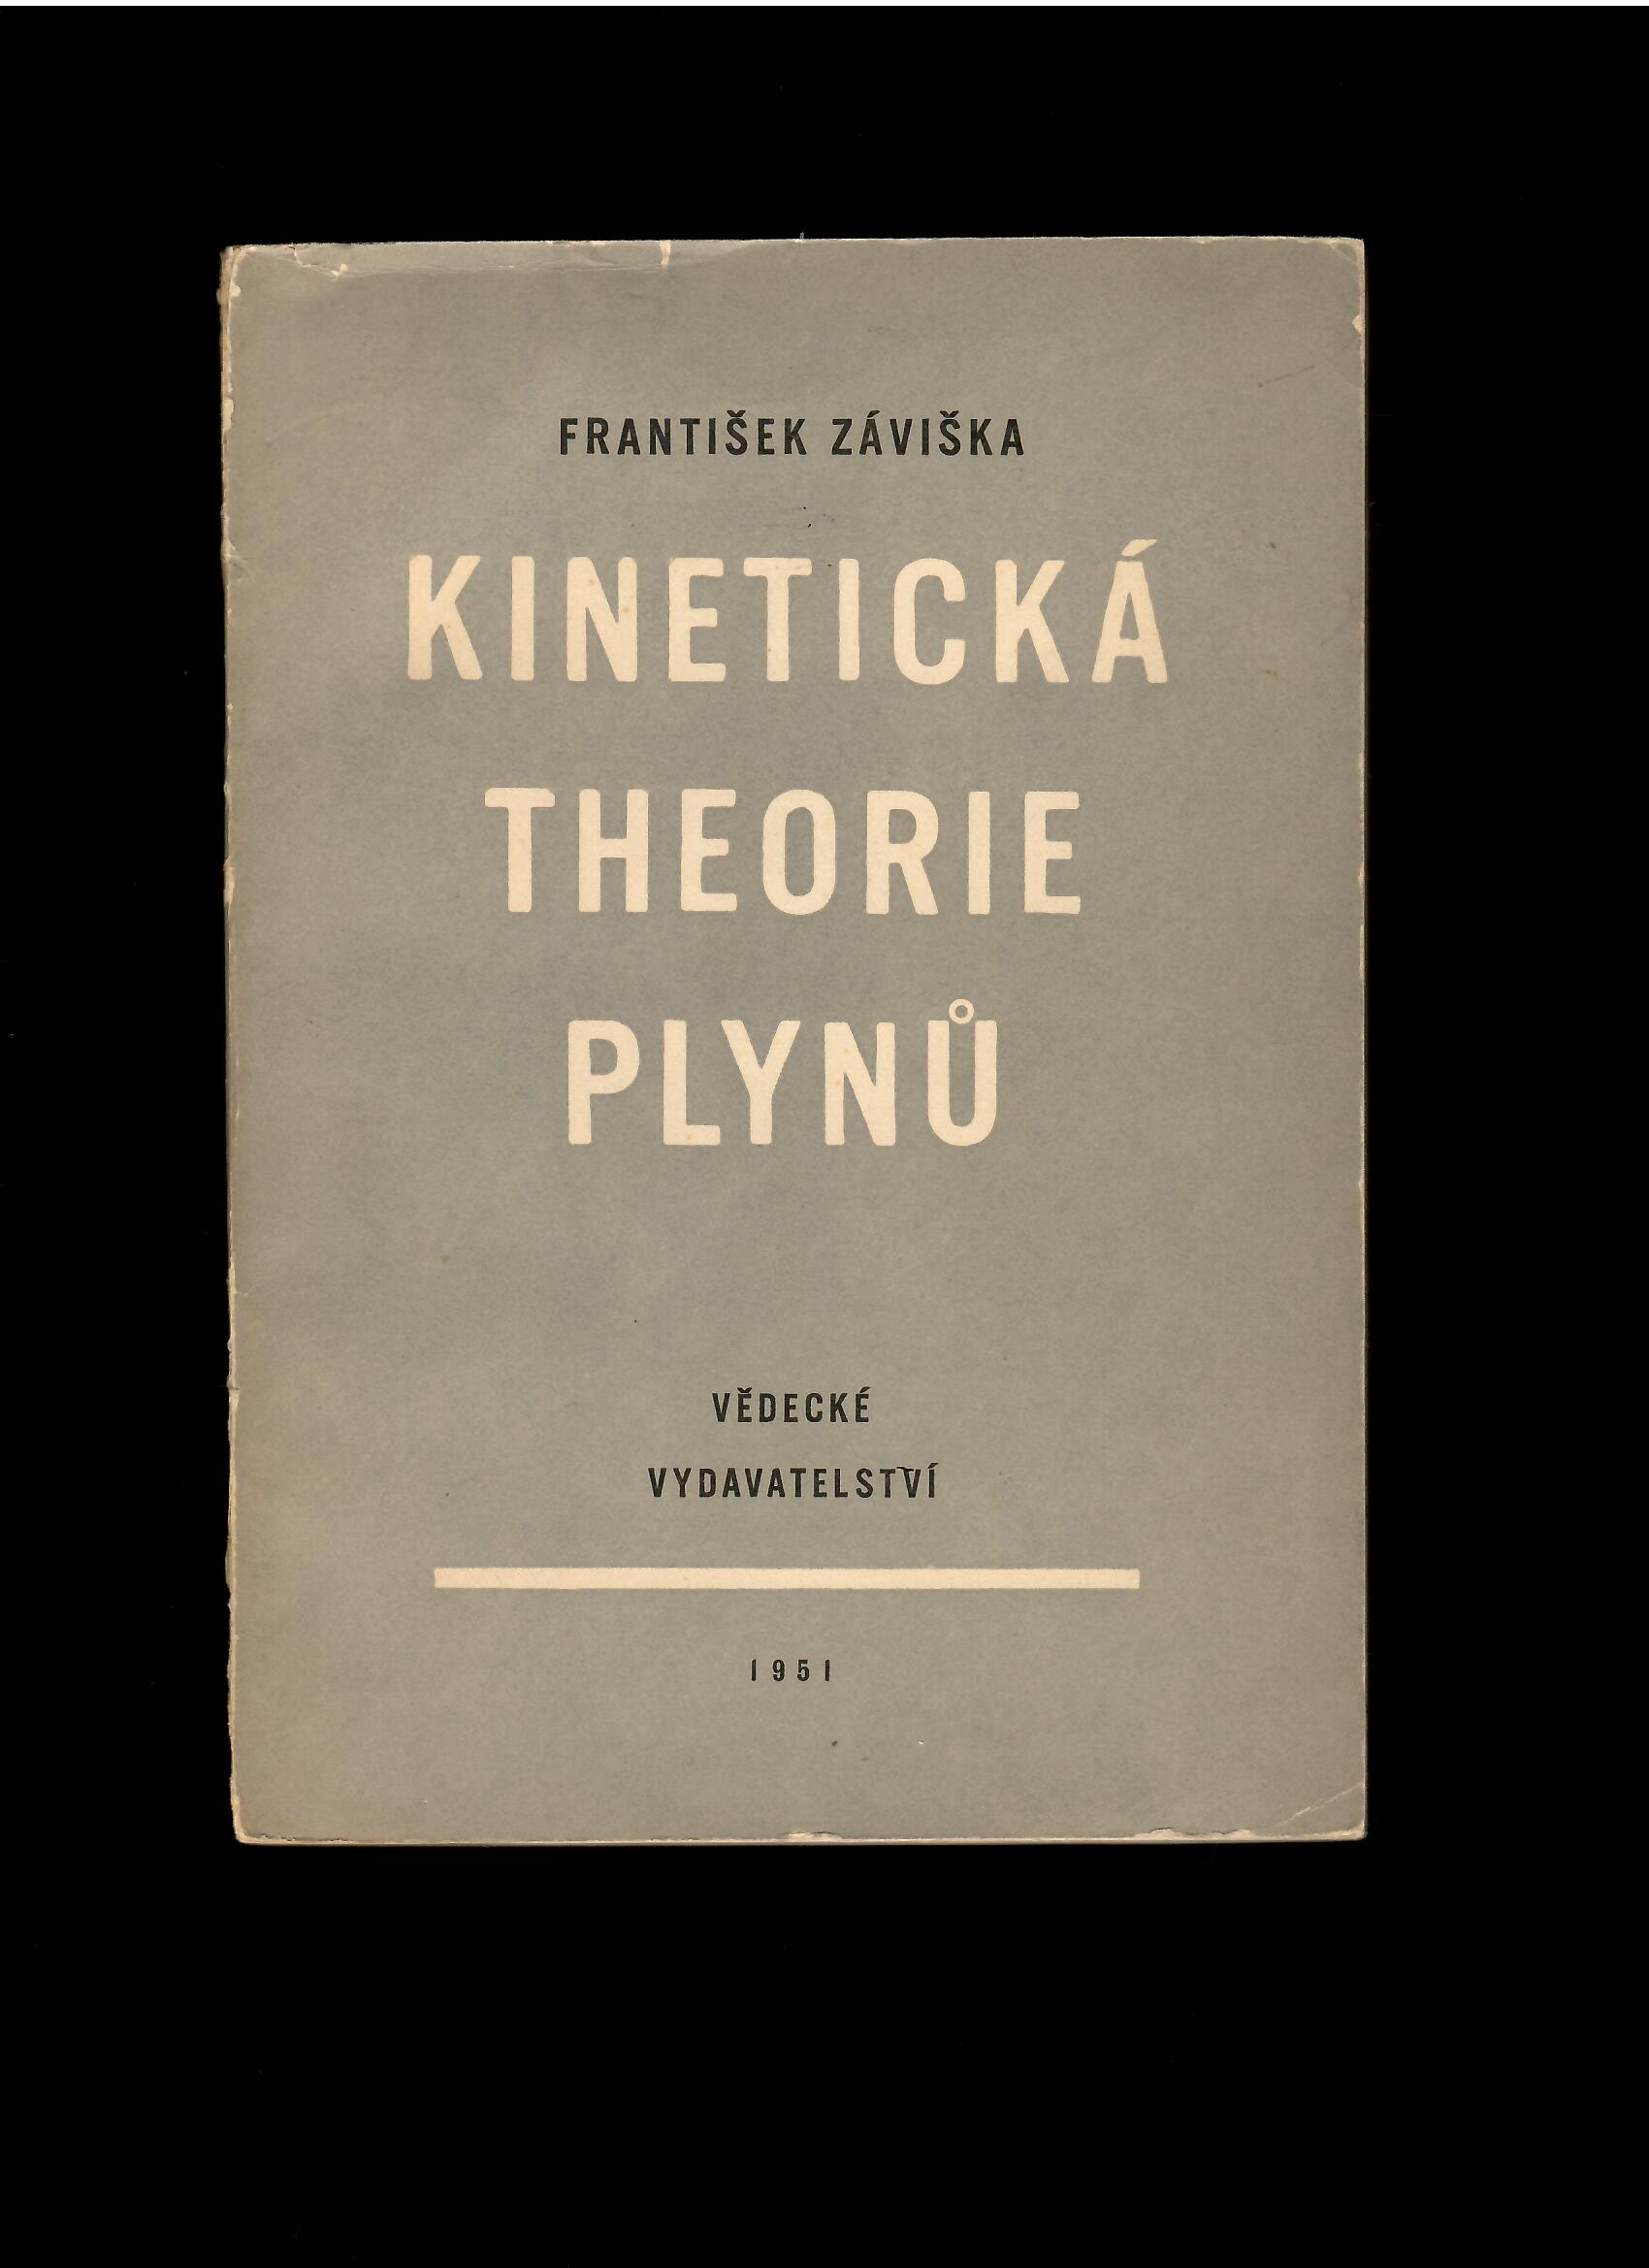 František Záviška: Kinetická theorie plynů